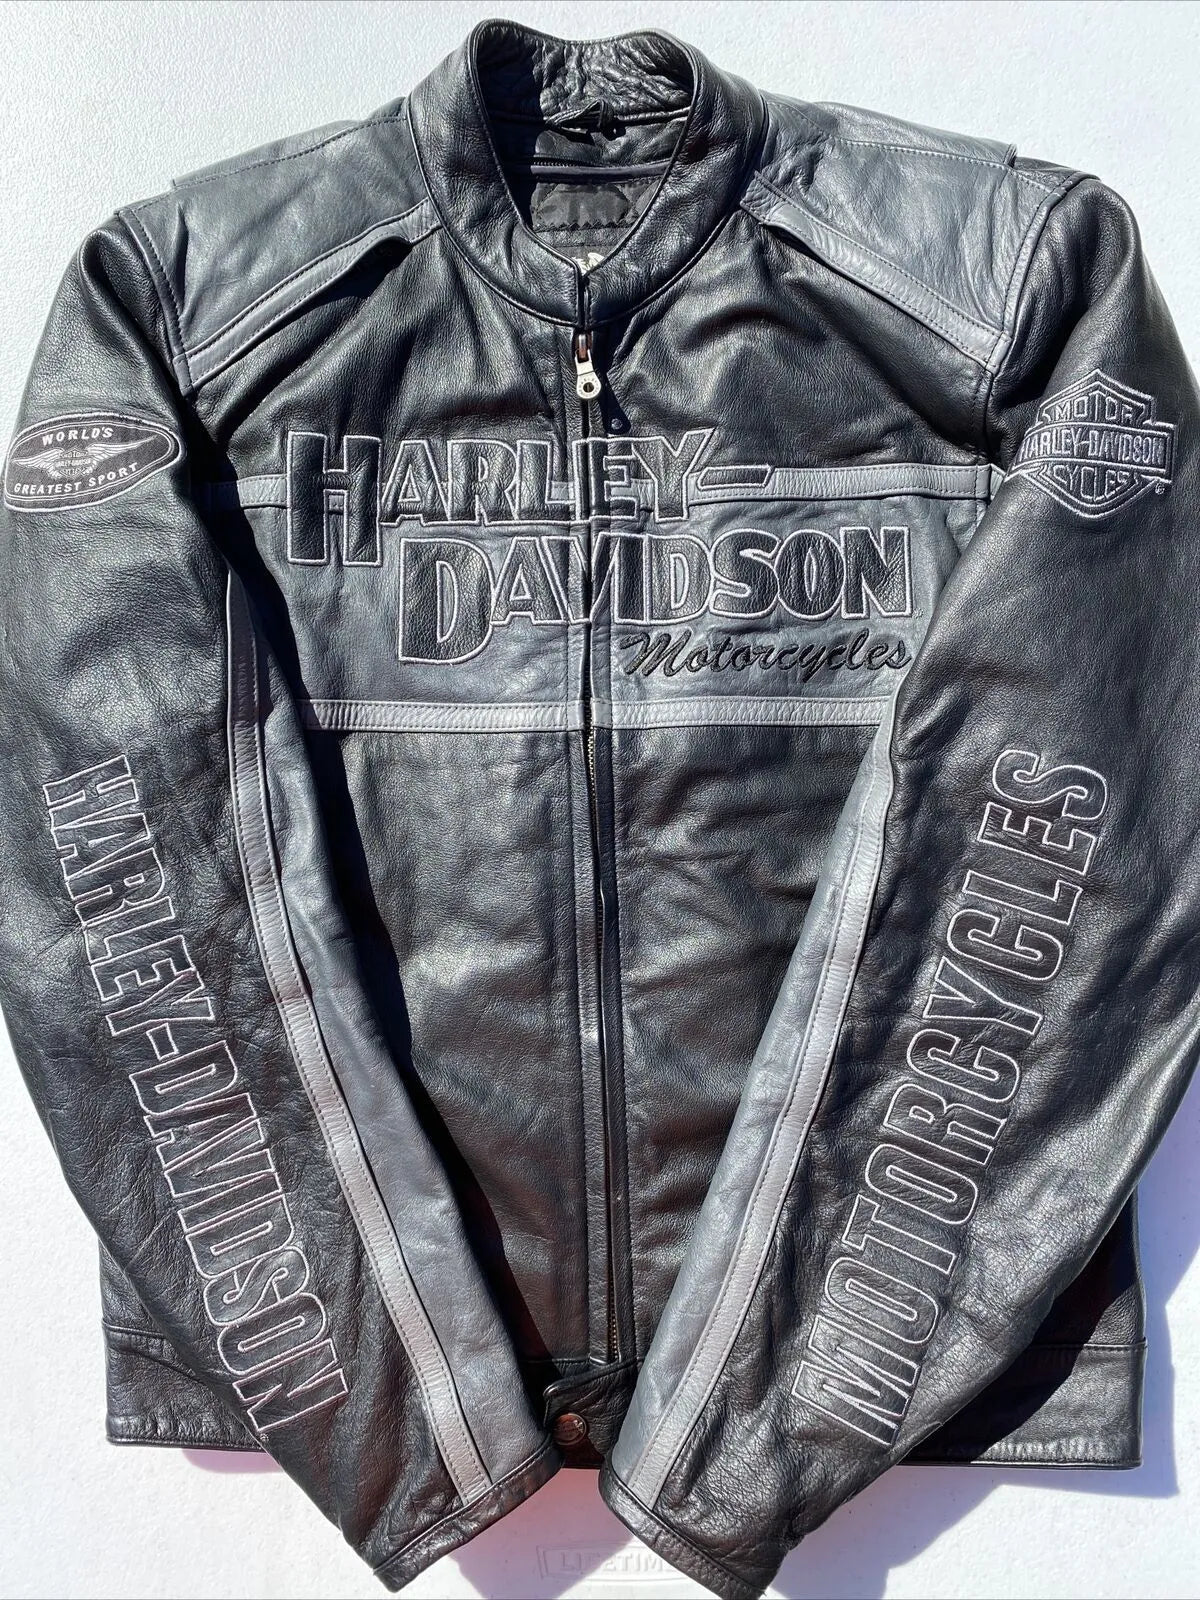 Harley Davidson Men’s CLASSIC CRUISER Leather Jacket Motorcycle Jackets